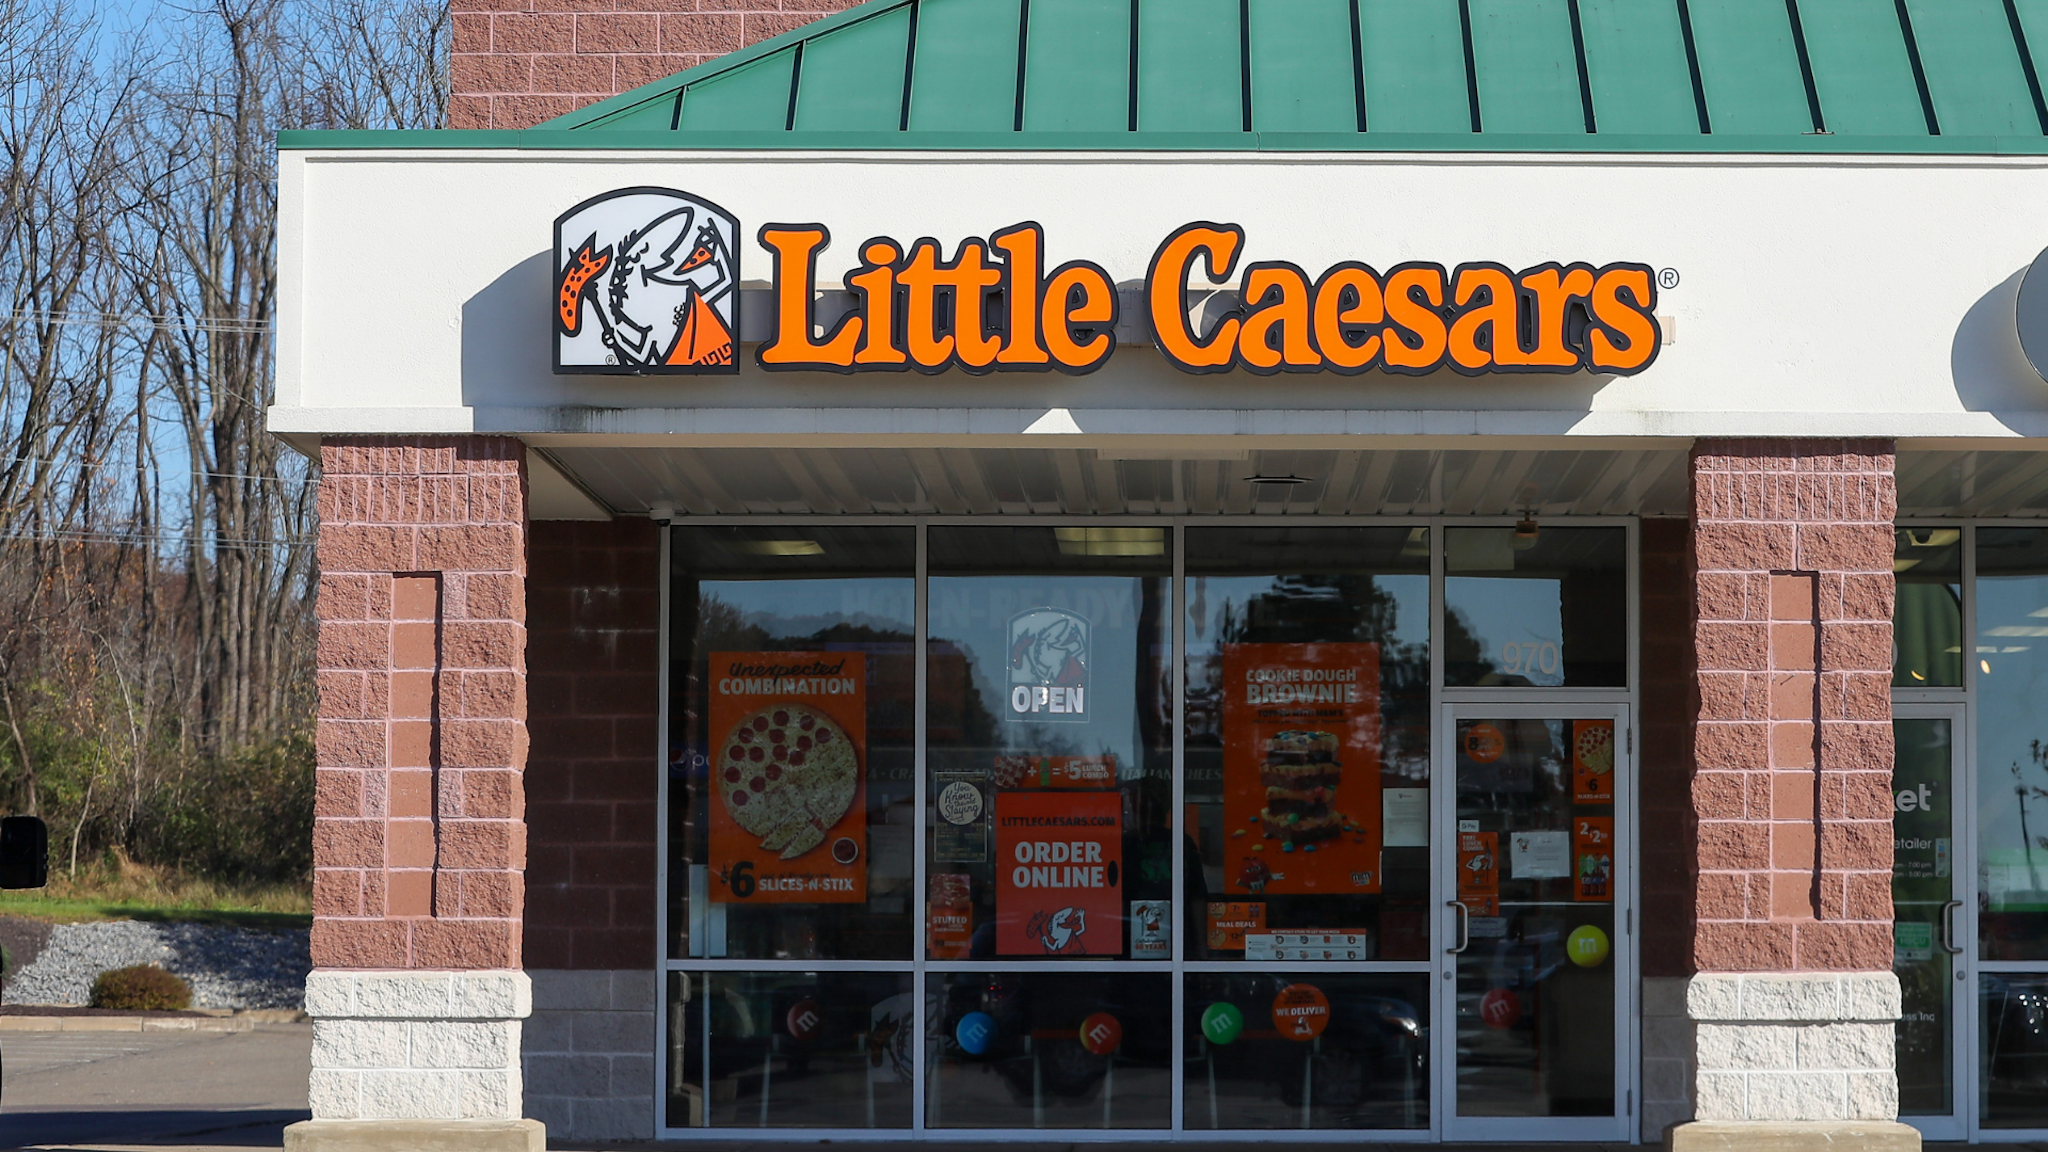 A Little Caesars restaurant is seen in Bloomsburg.